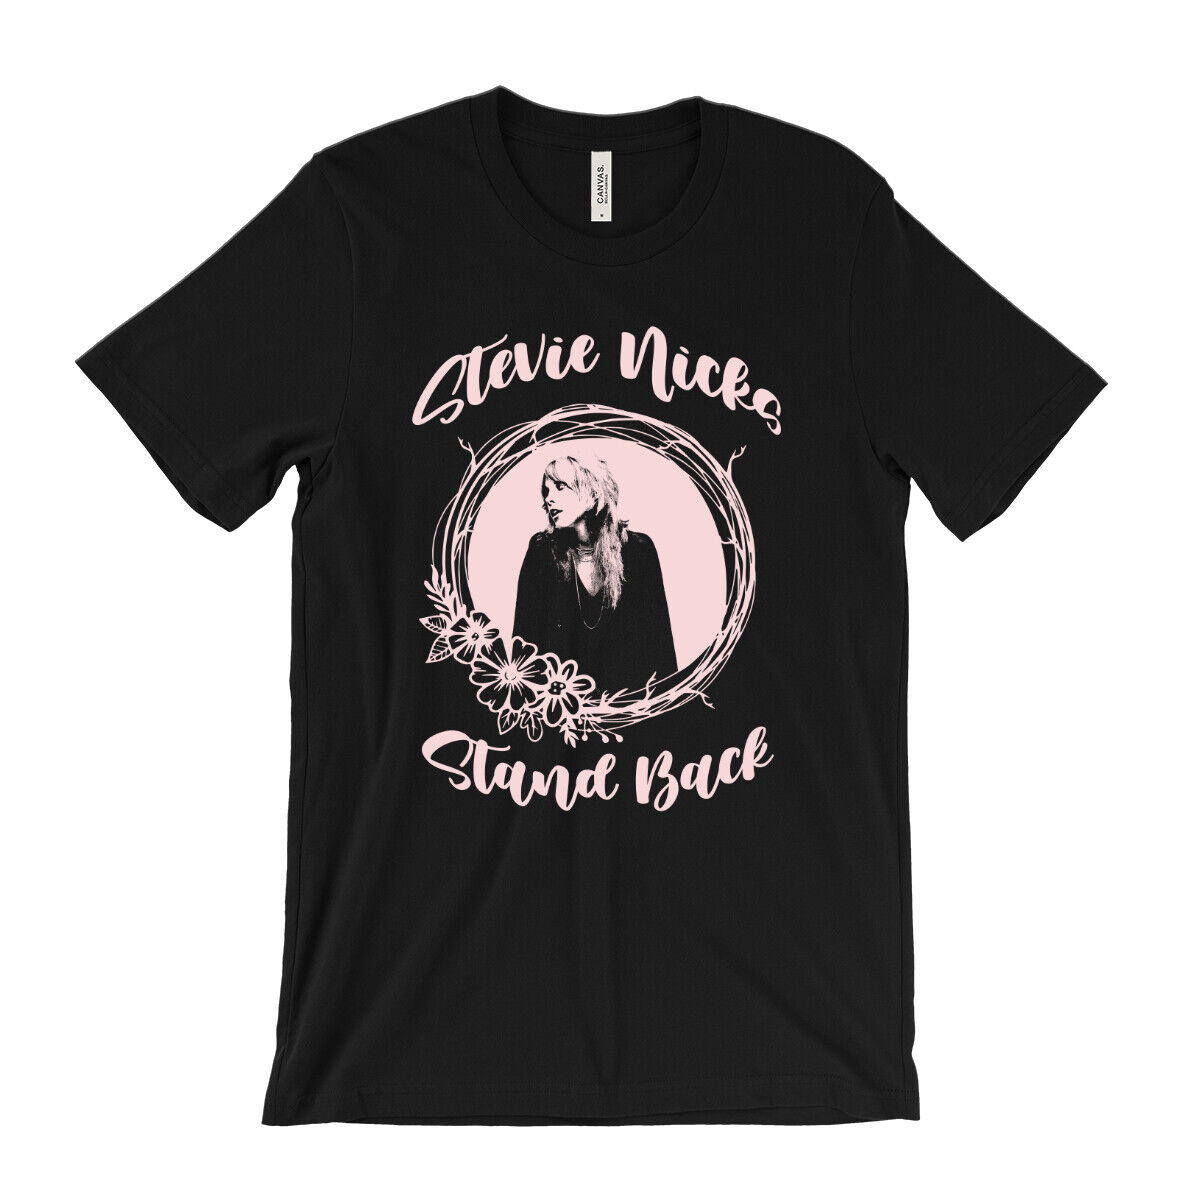 Stevie Nicks T Shirt - Stand Back - Rumours - Dreams - Fleetwood Mac